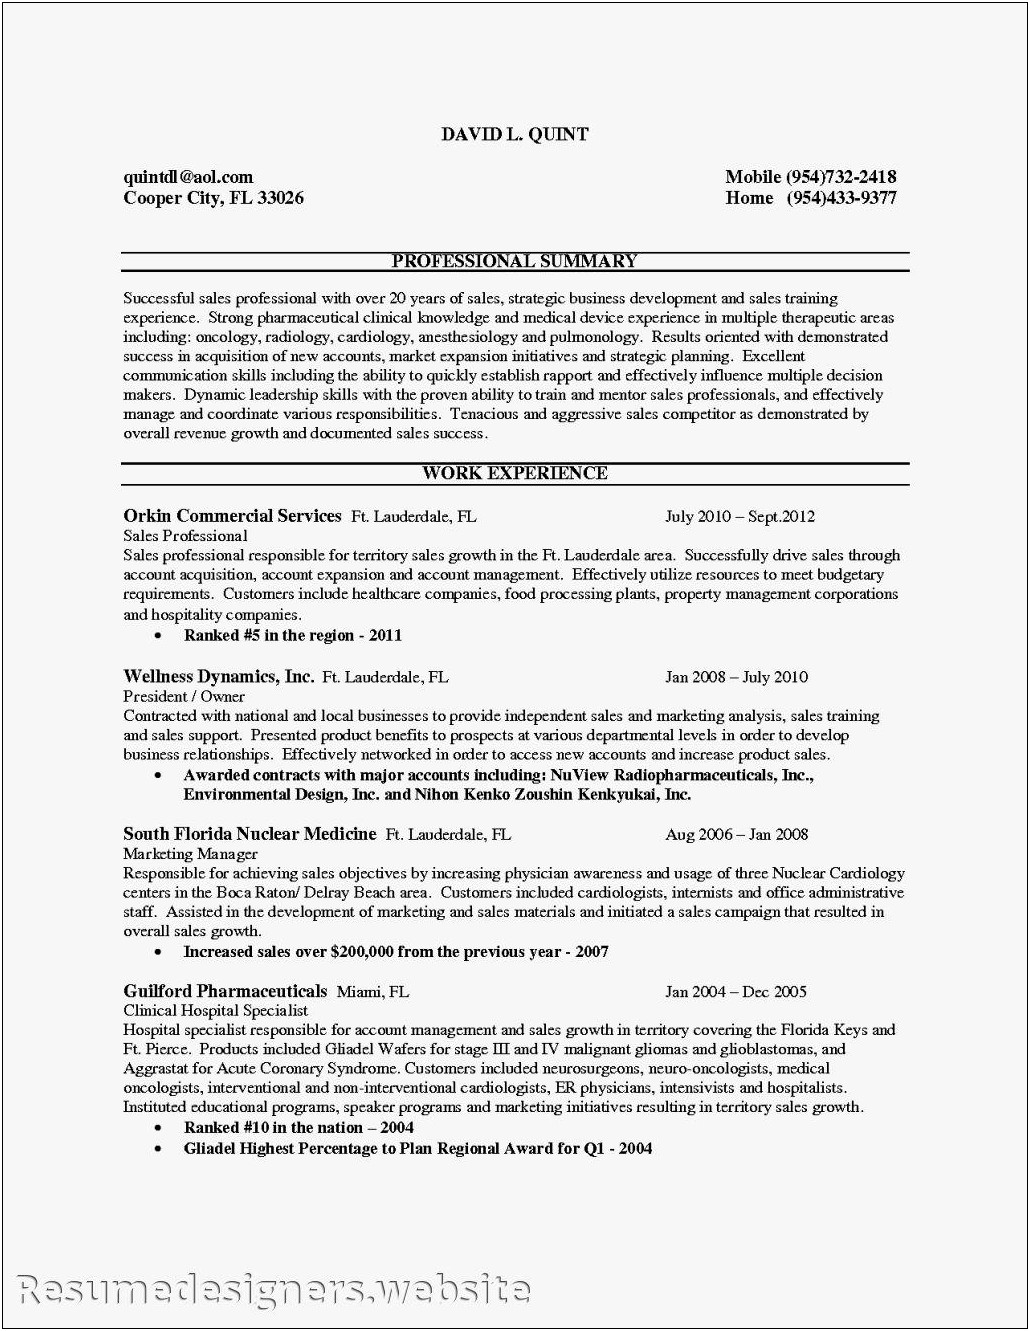 Resume Summary Examples Entry Level It